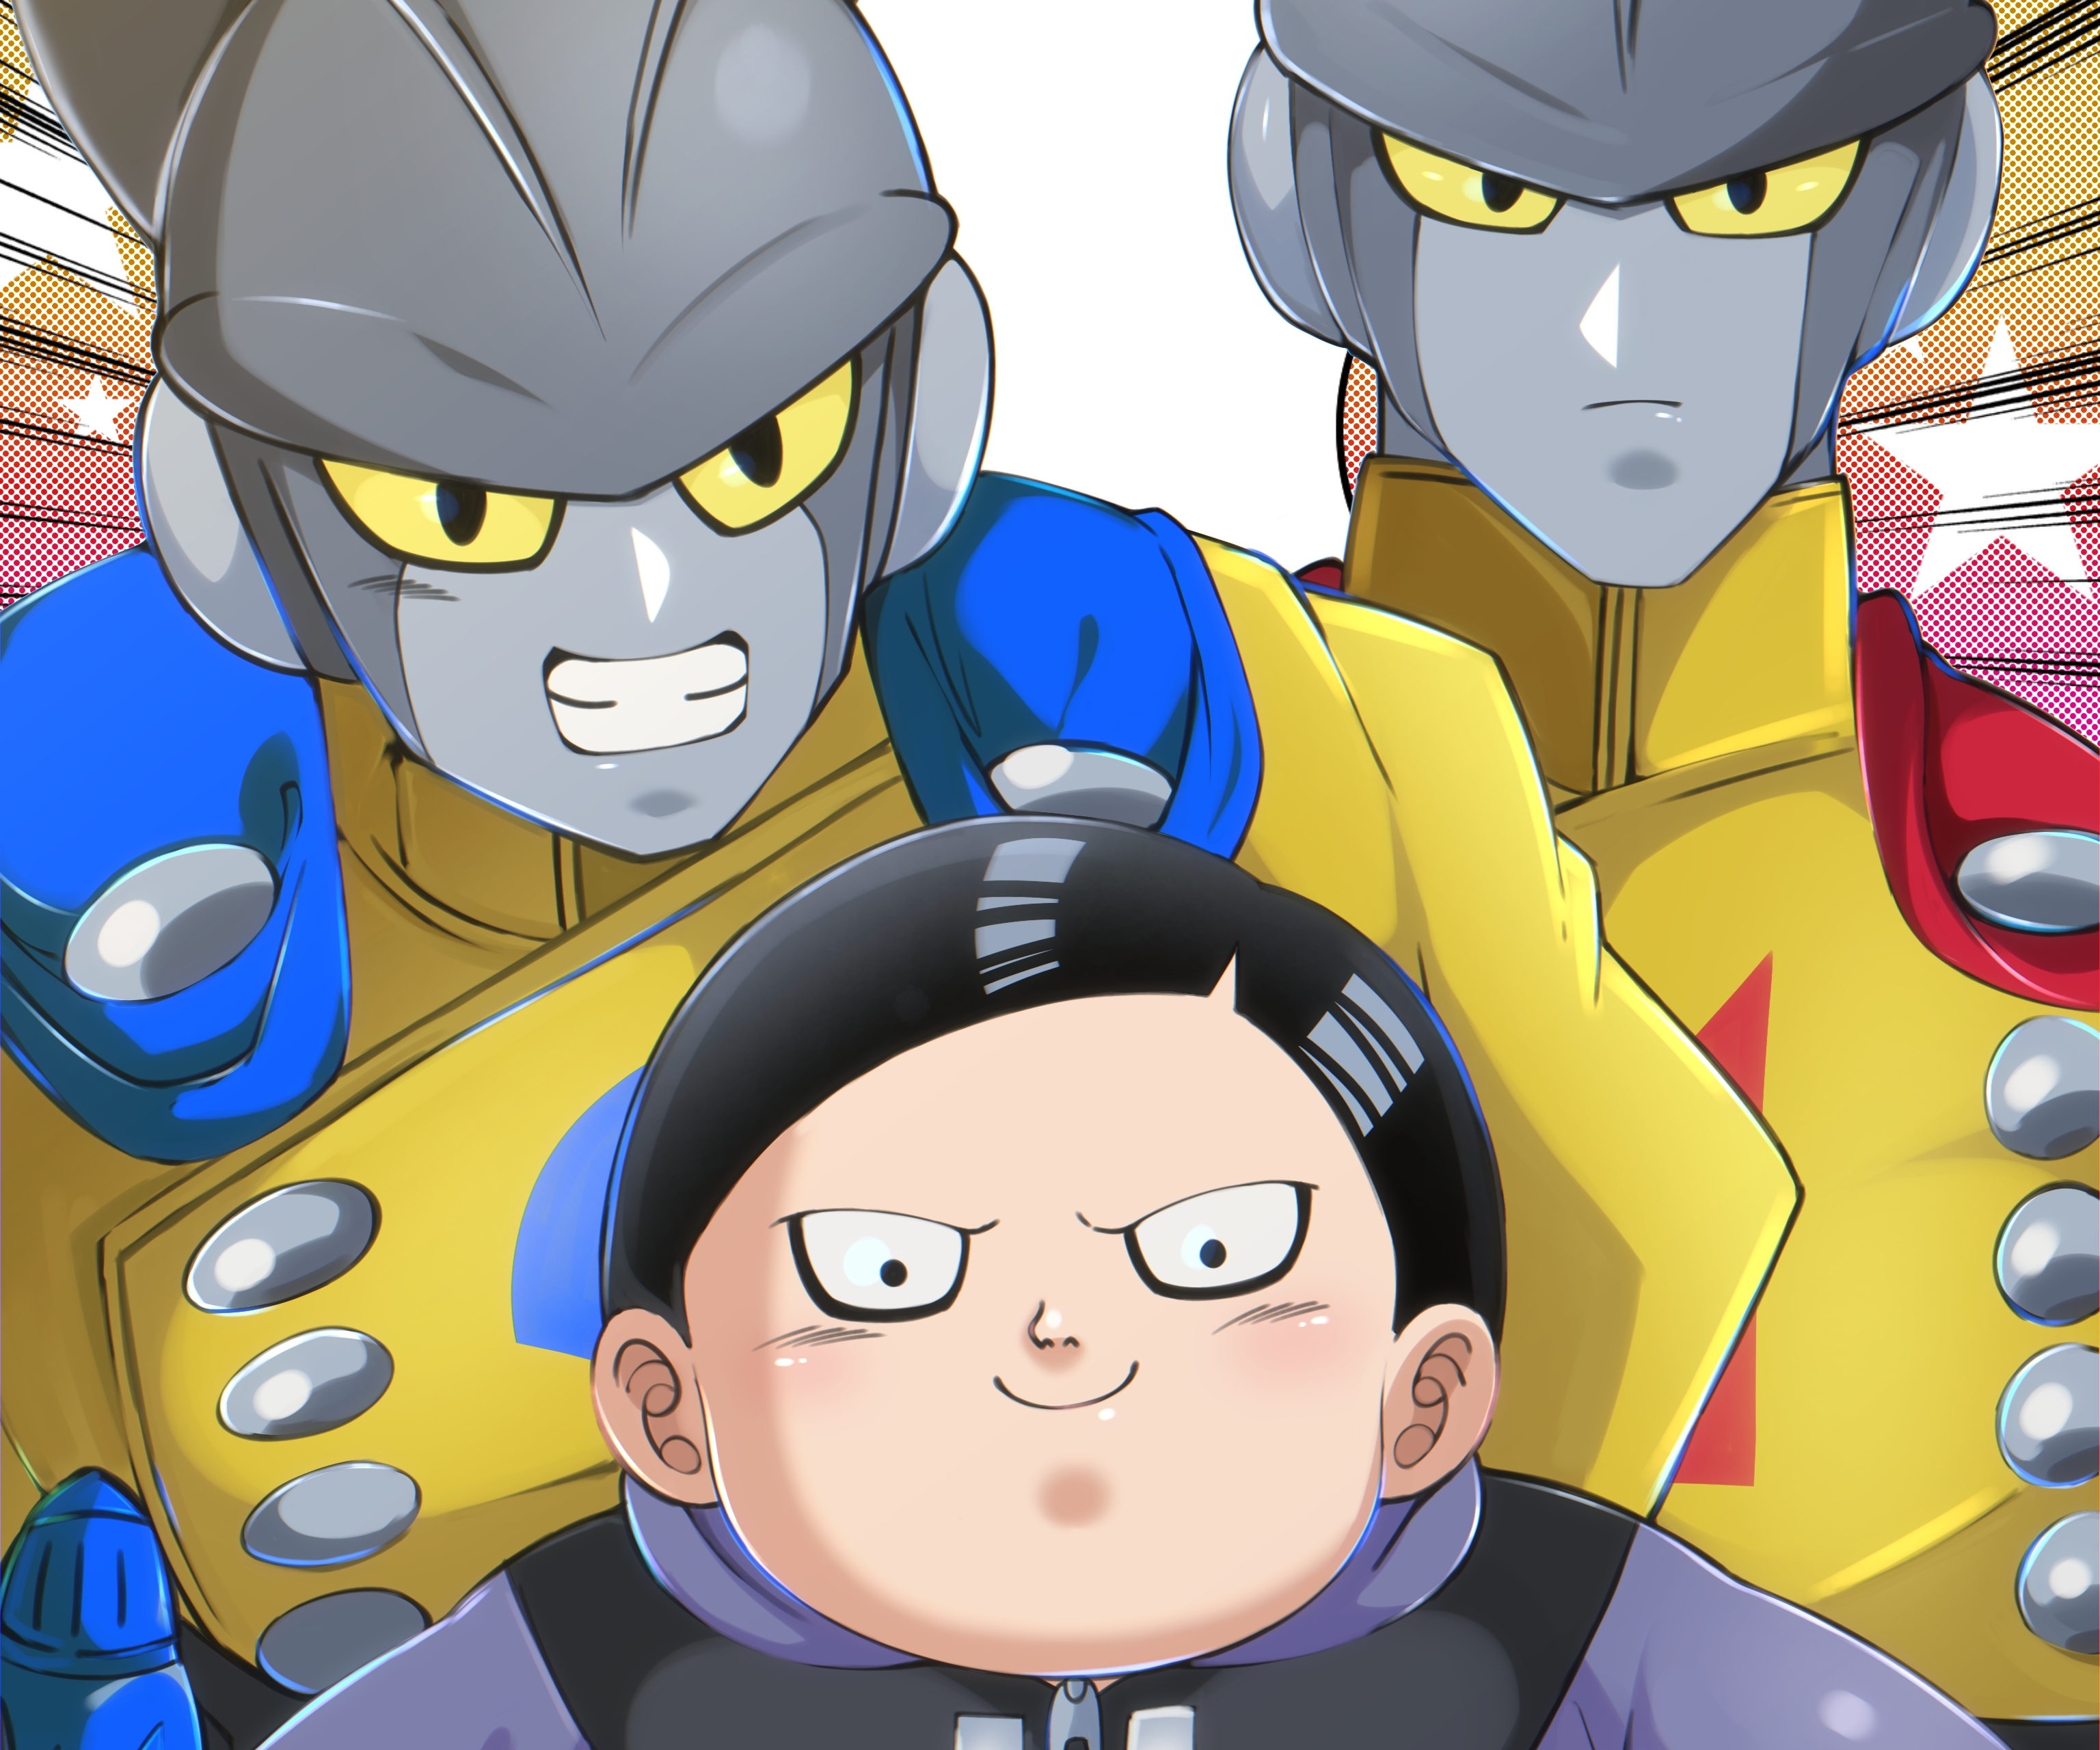 Anime Dragon Ball Super: Super Hero HD Wallpaper | Background Image